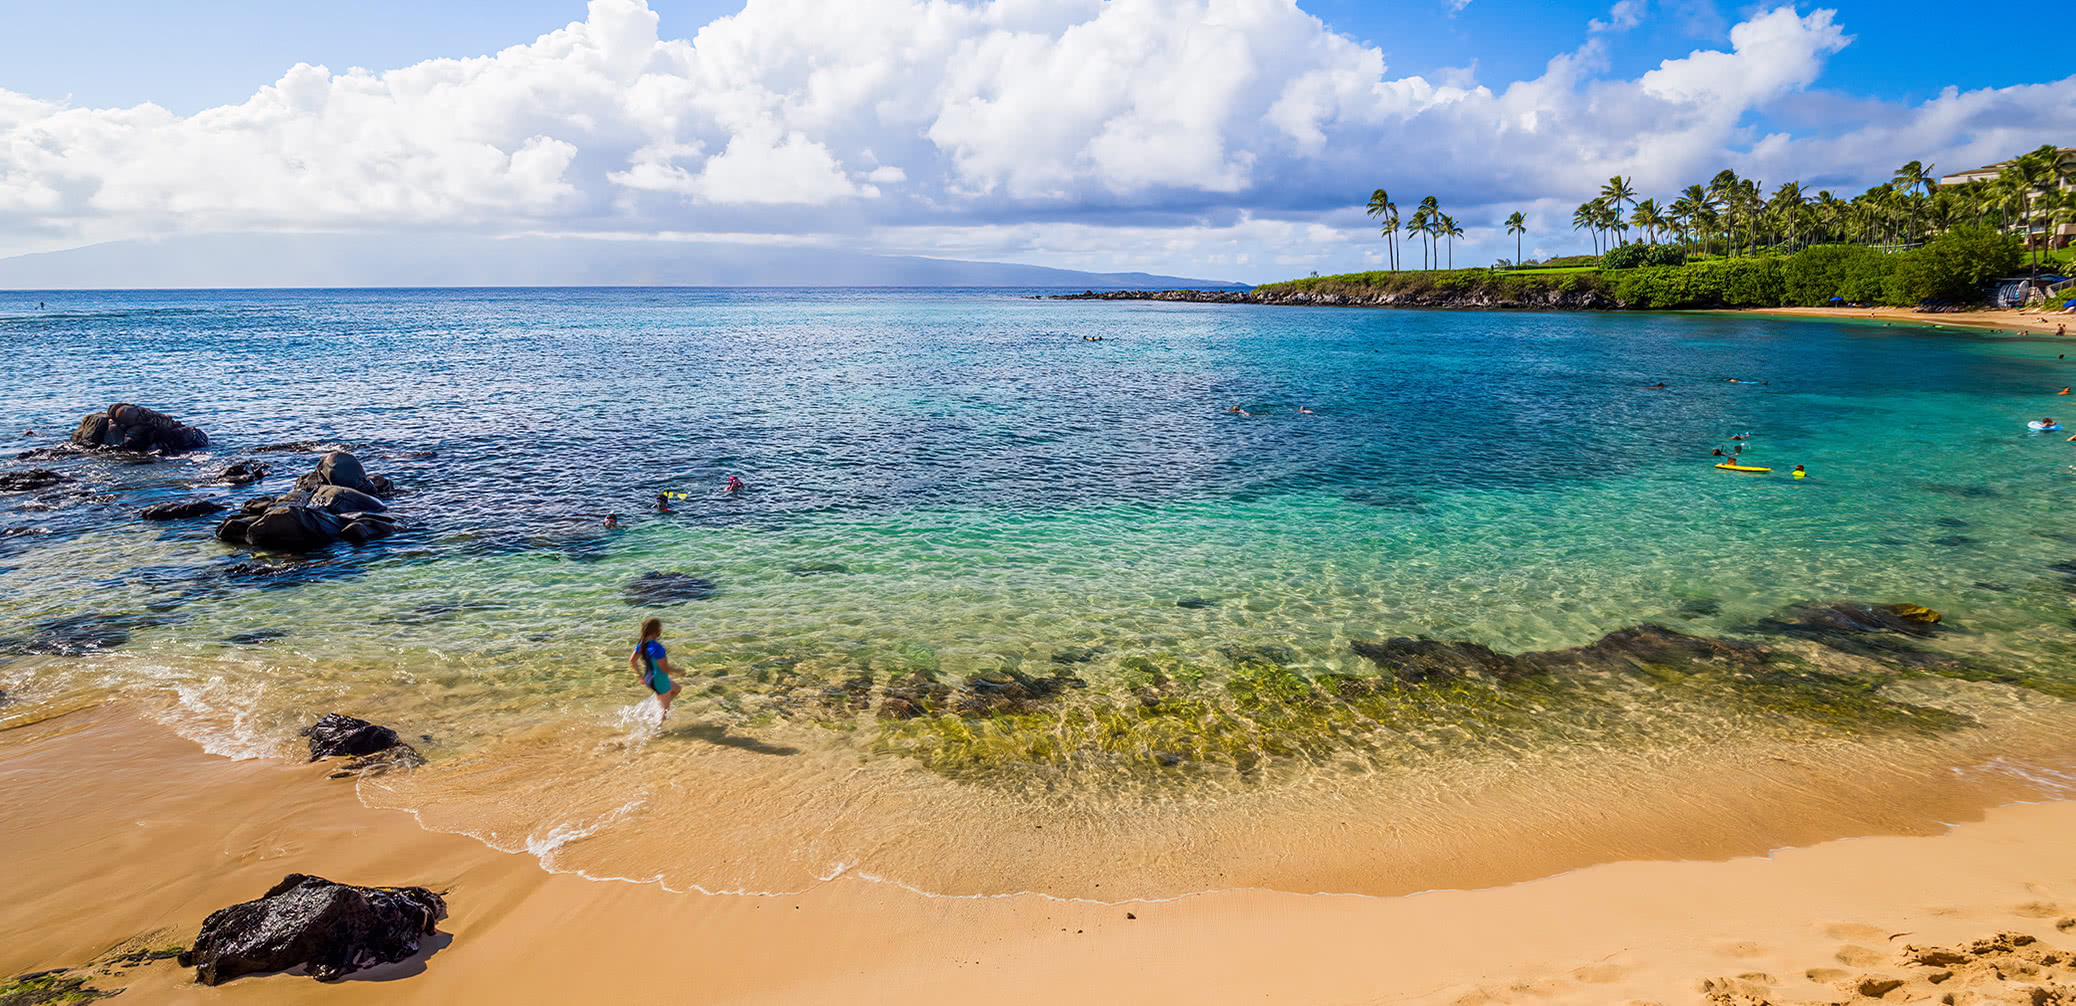 Does Ritz-Carlton Kapalua On Maui Have a beach?